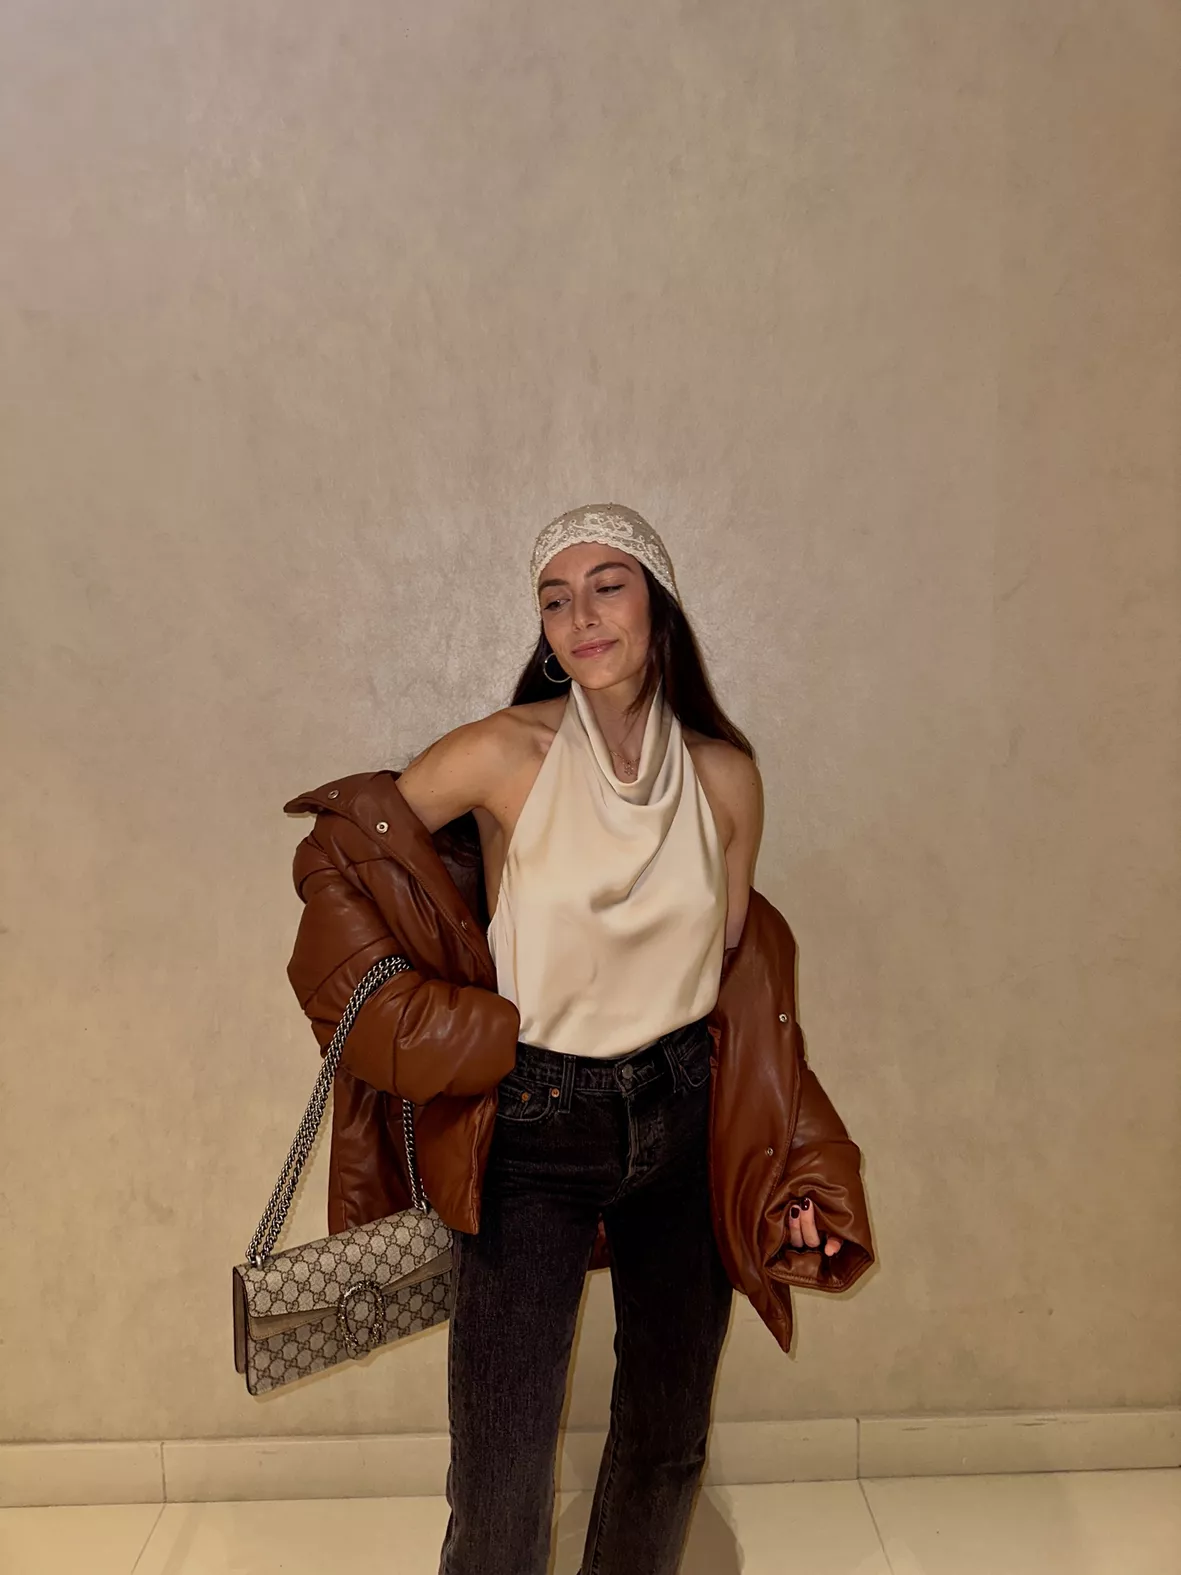 Gucci Dionysus mini bag curated on LTK